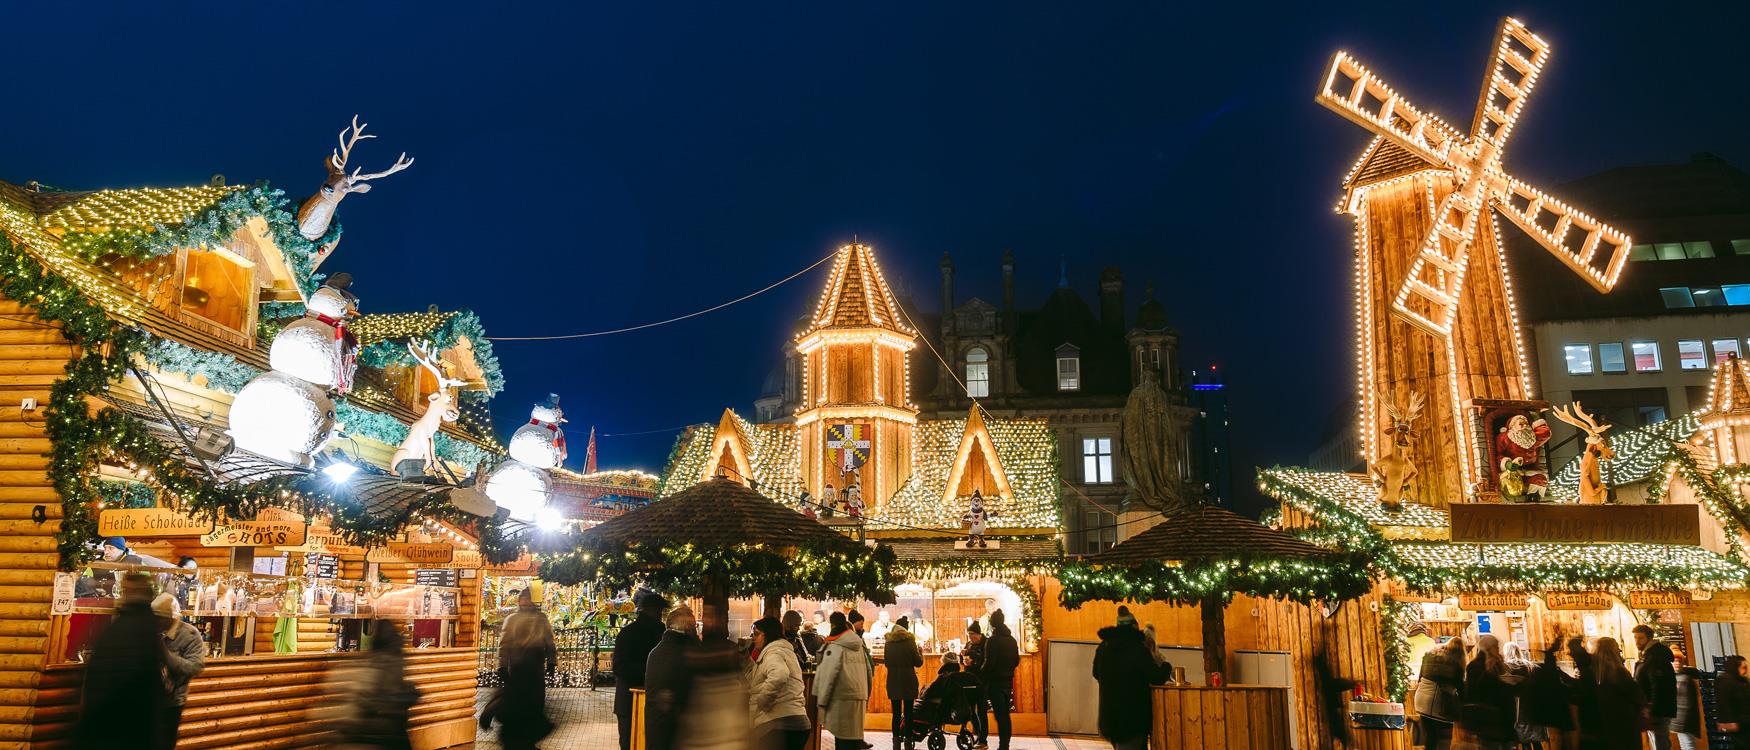 Birmingham's Frankfurt Christmas Market - until 24 December!